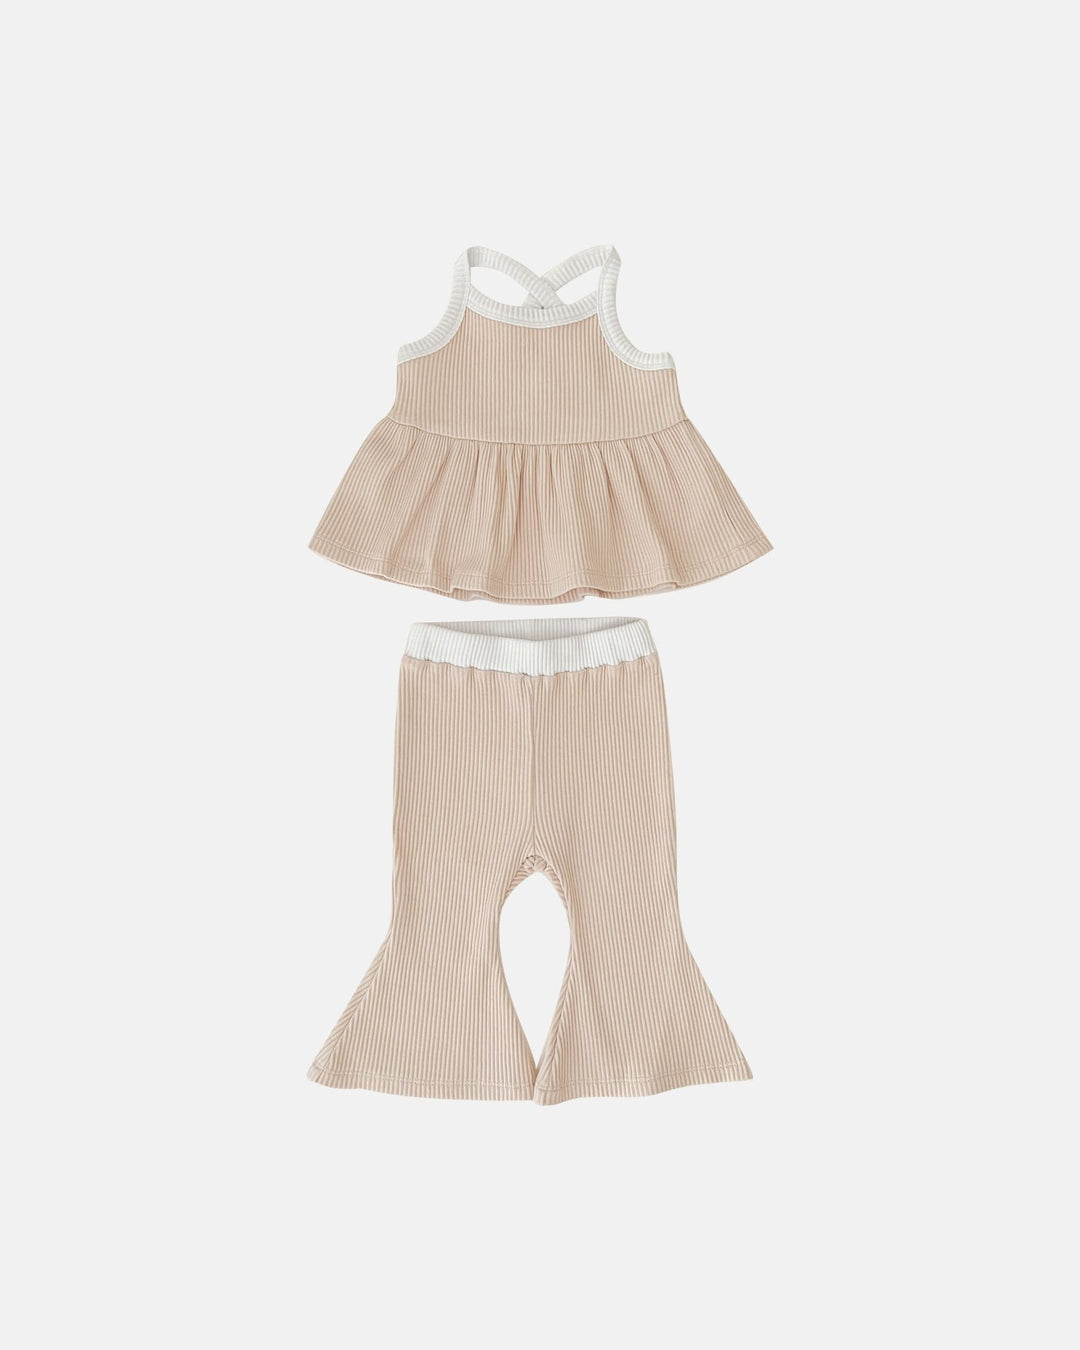 Vanilla Bell Bottom Set - BABY GIRL CLOTHES - LUCKY PANDA KIDS